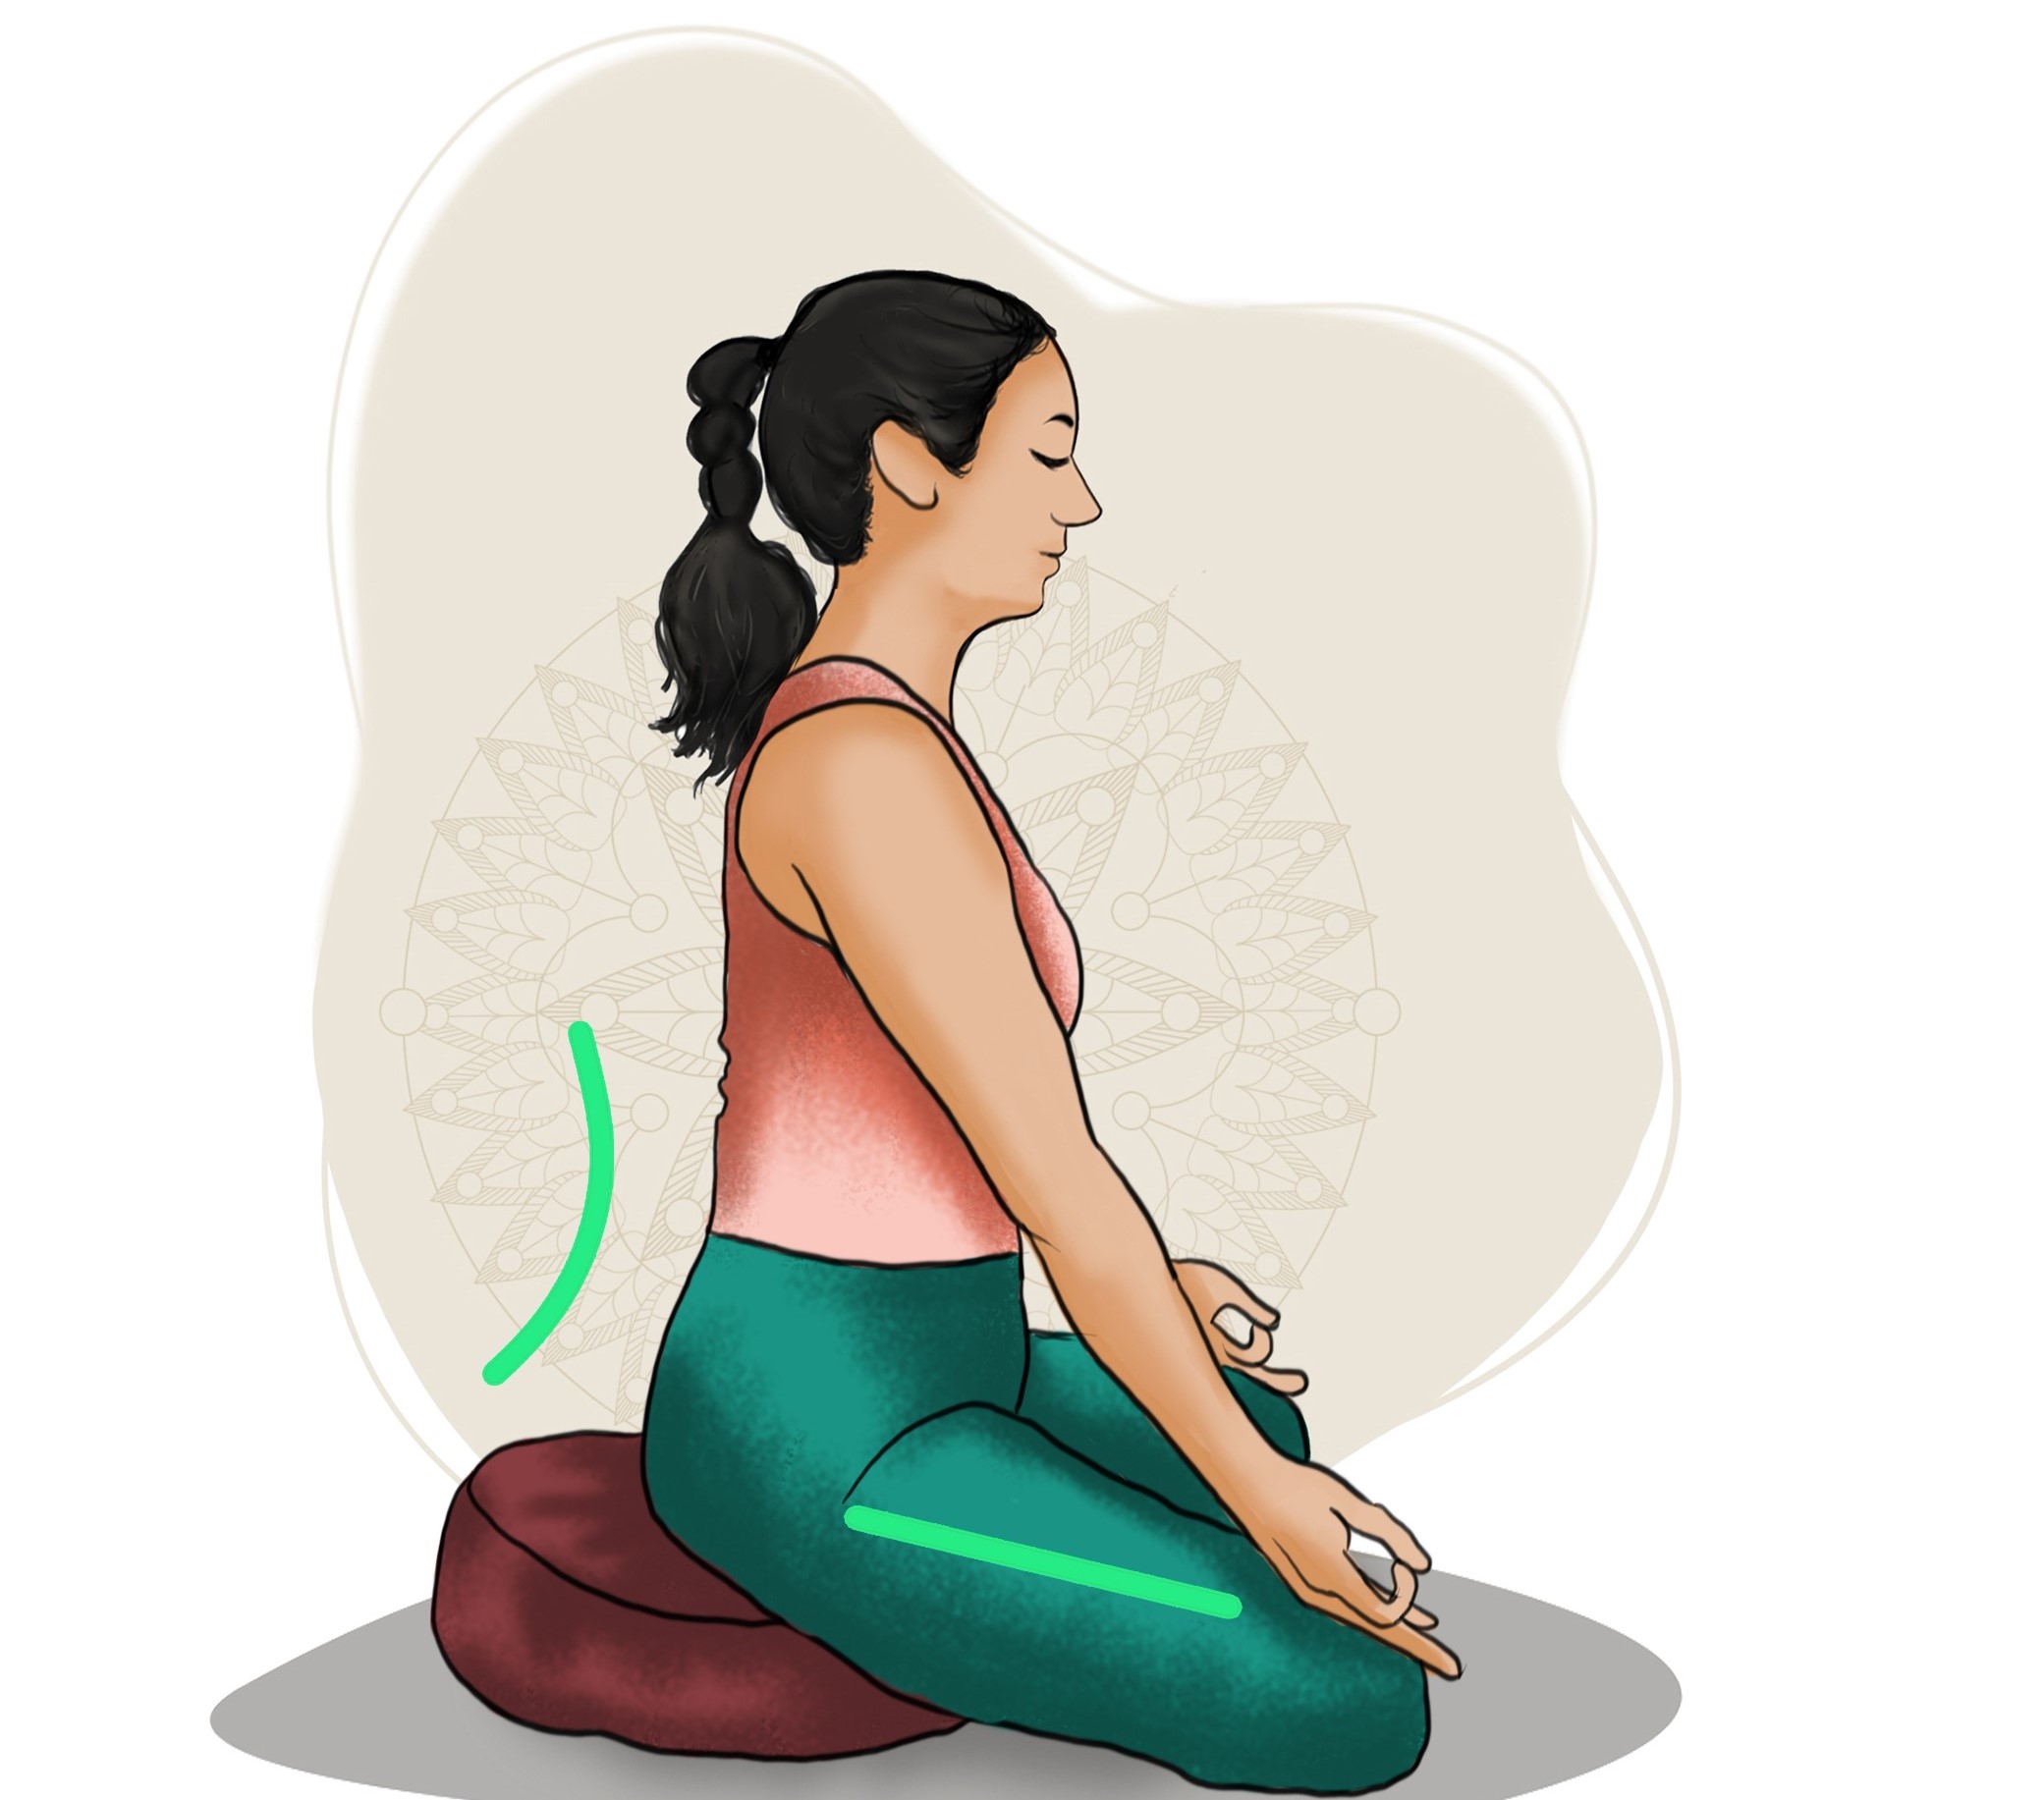 Yin yoga to prepare your body for meditation - Ekhart Yoga